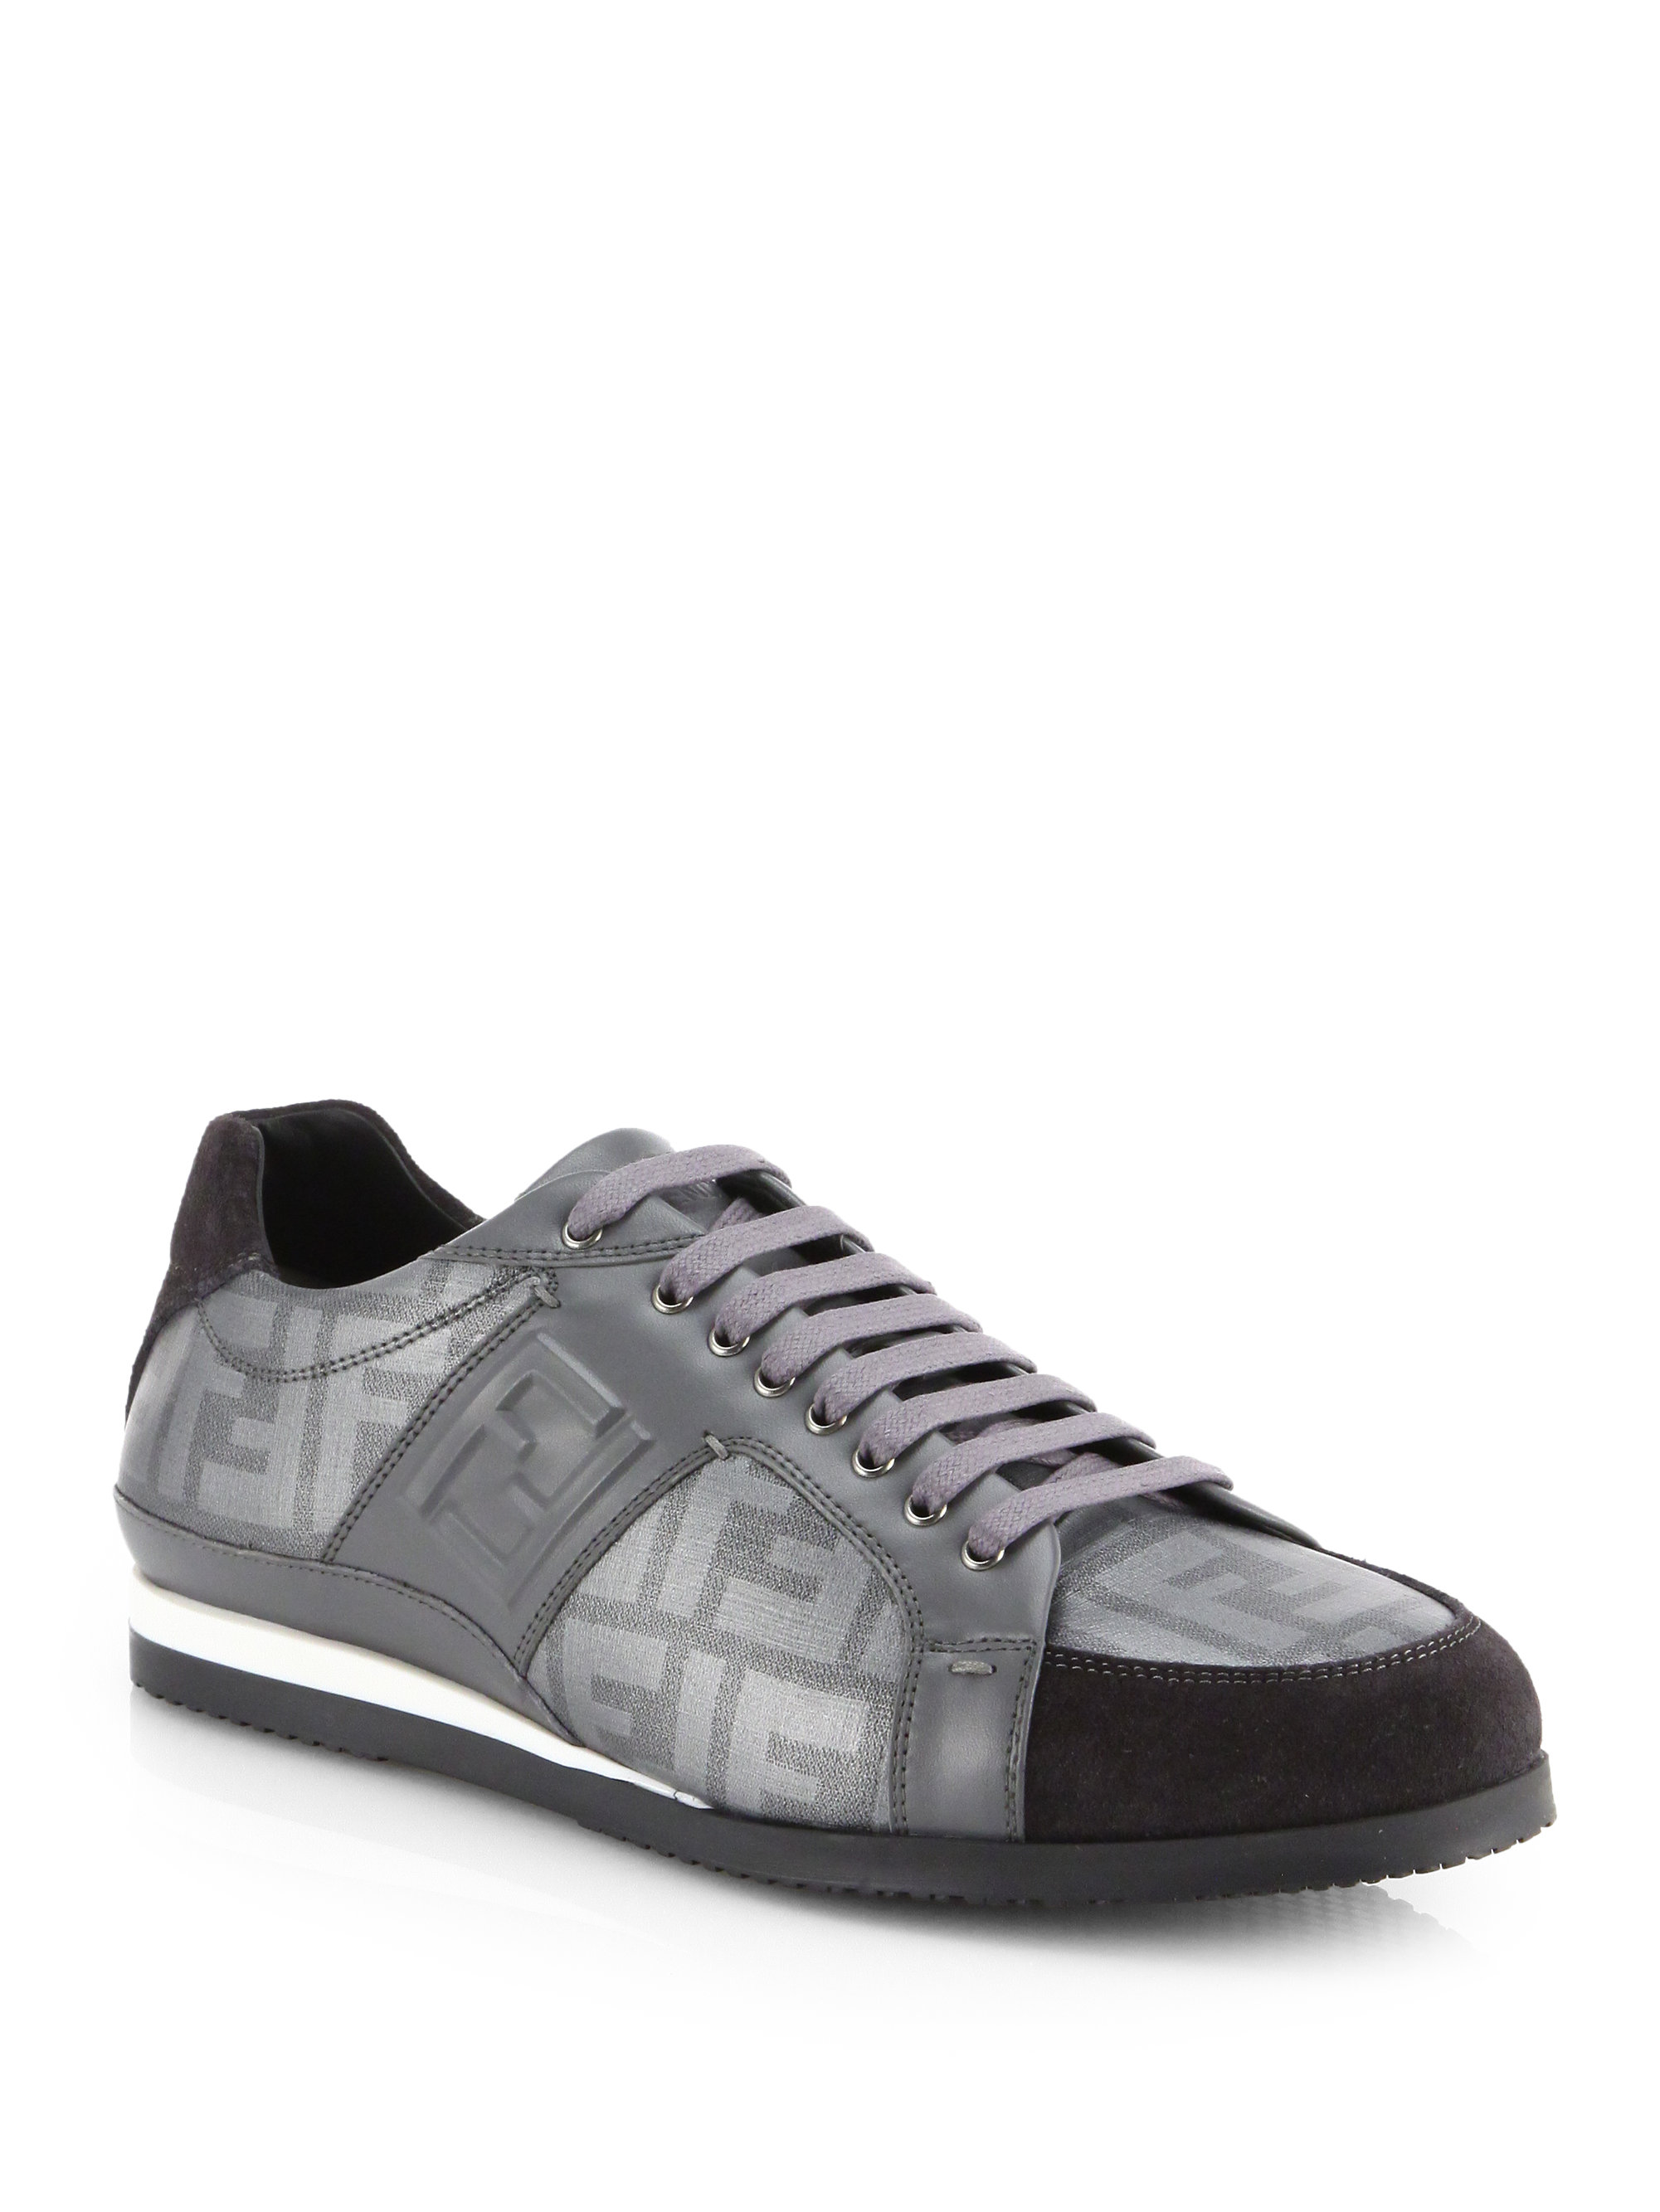 Fendi Zucca Laceup Sneakers in Gray for Men | Lyst